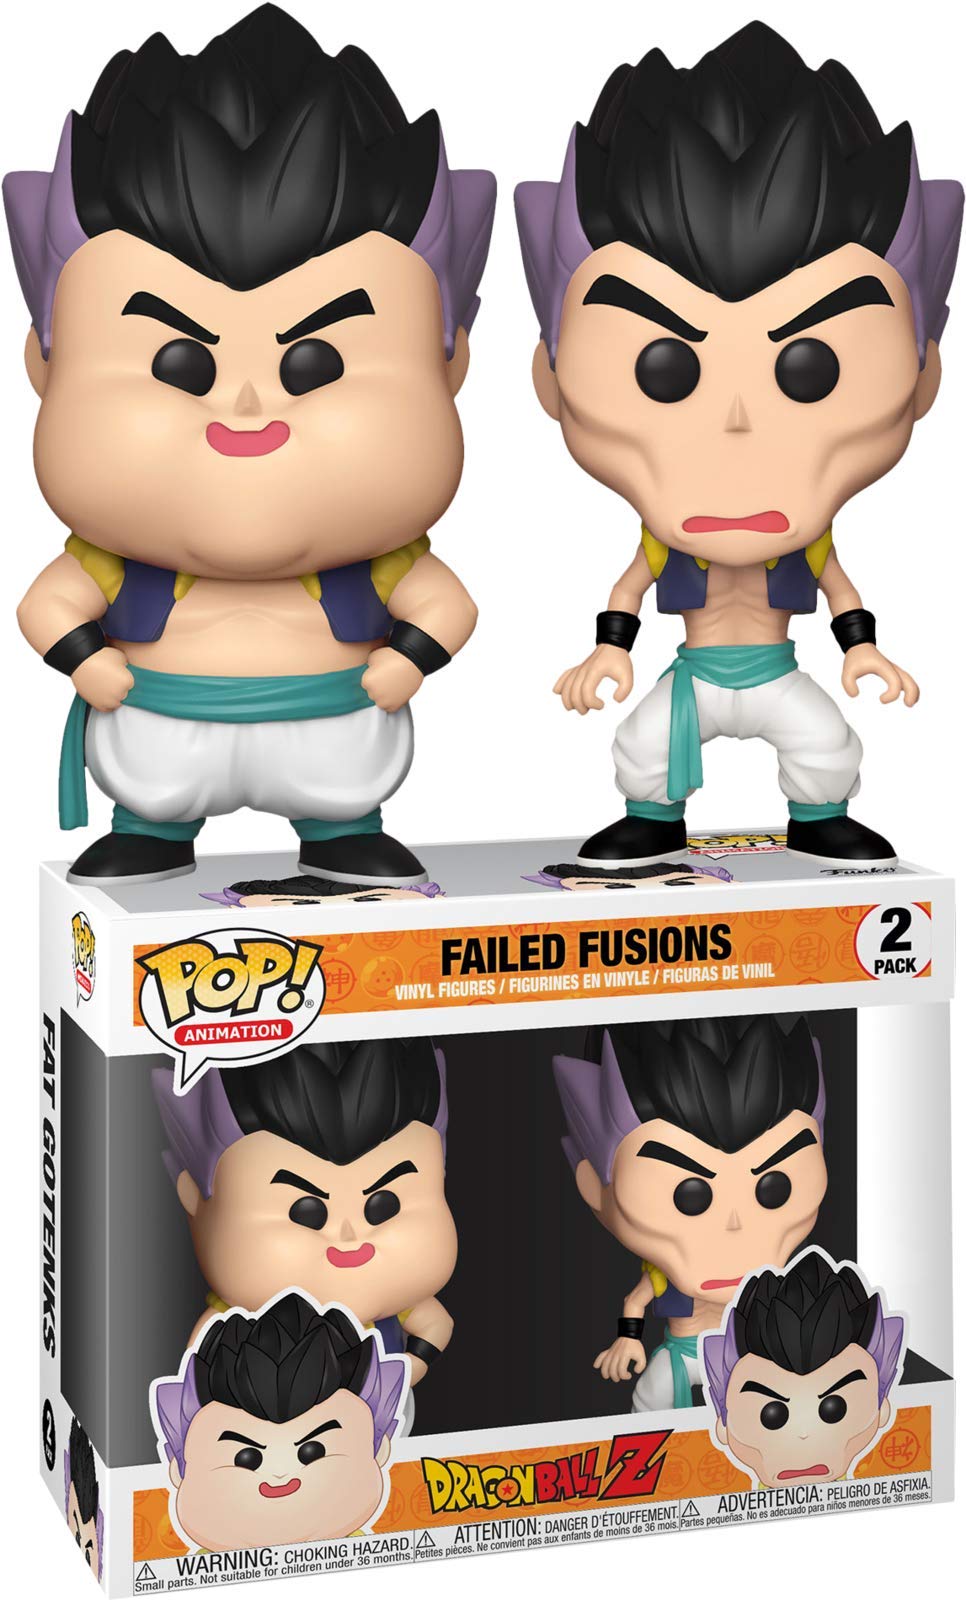 Funko POP! Animation Dragon Ball Z Failed Fusions 2 Pack